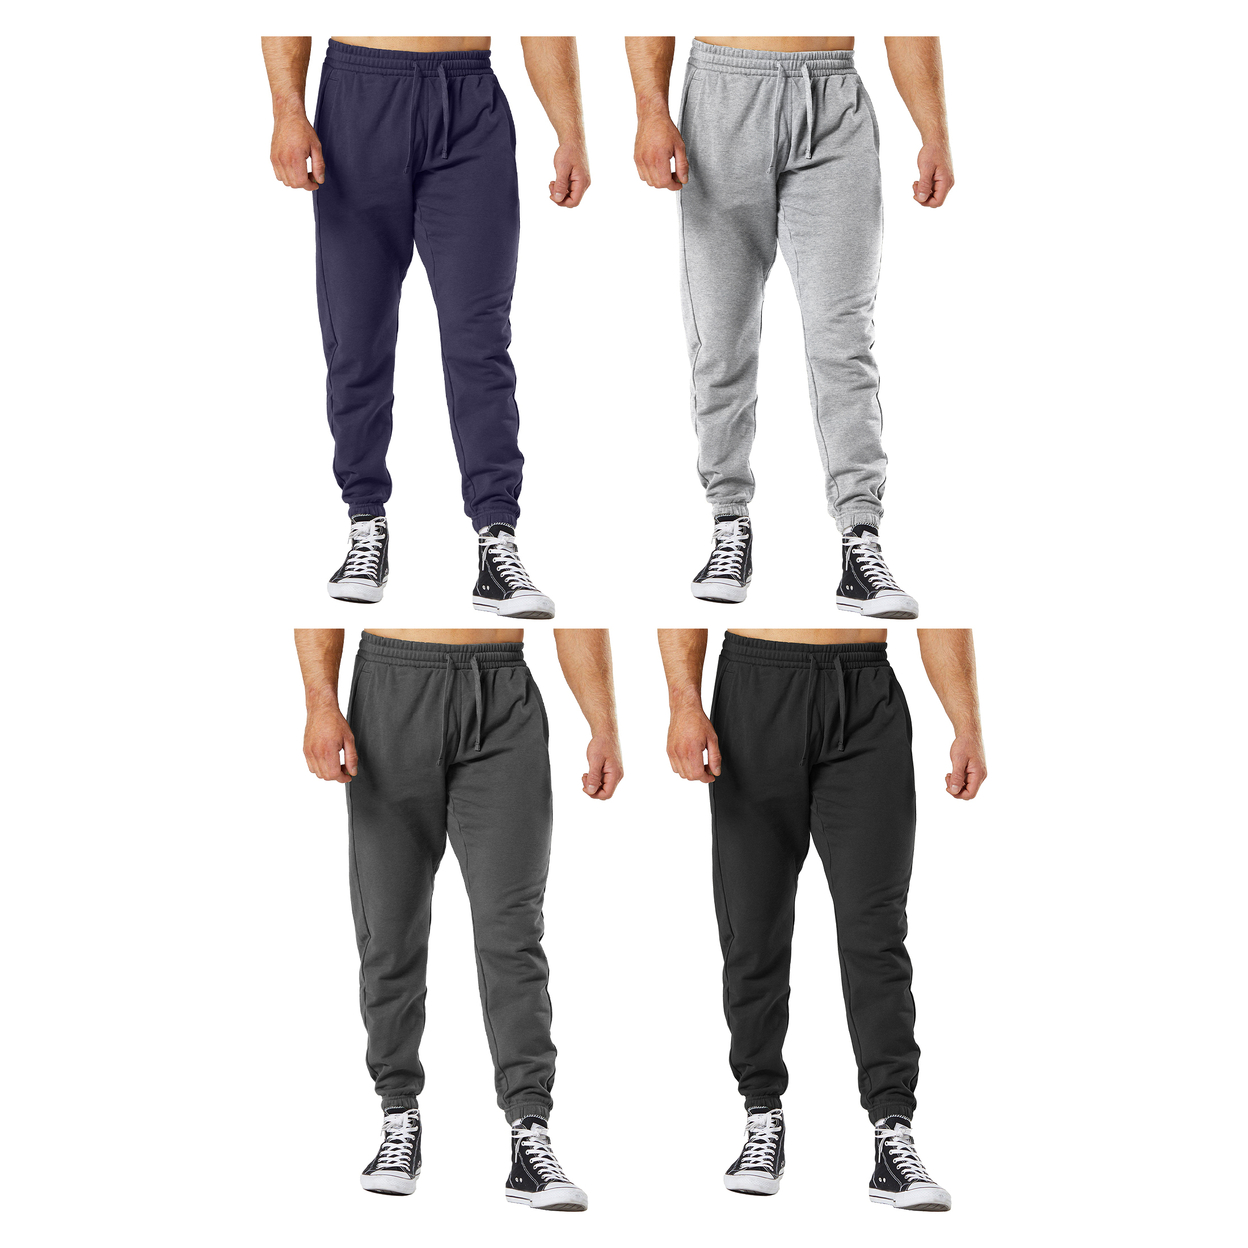 2-Pack: Men's Ultra-Soft Cozy Winter Warm Casual Fleece-Lined Sweatpants Jogger - Black & Charcoal, X-large